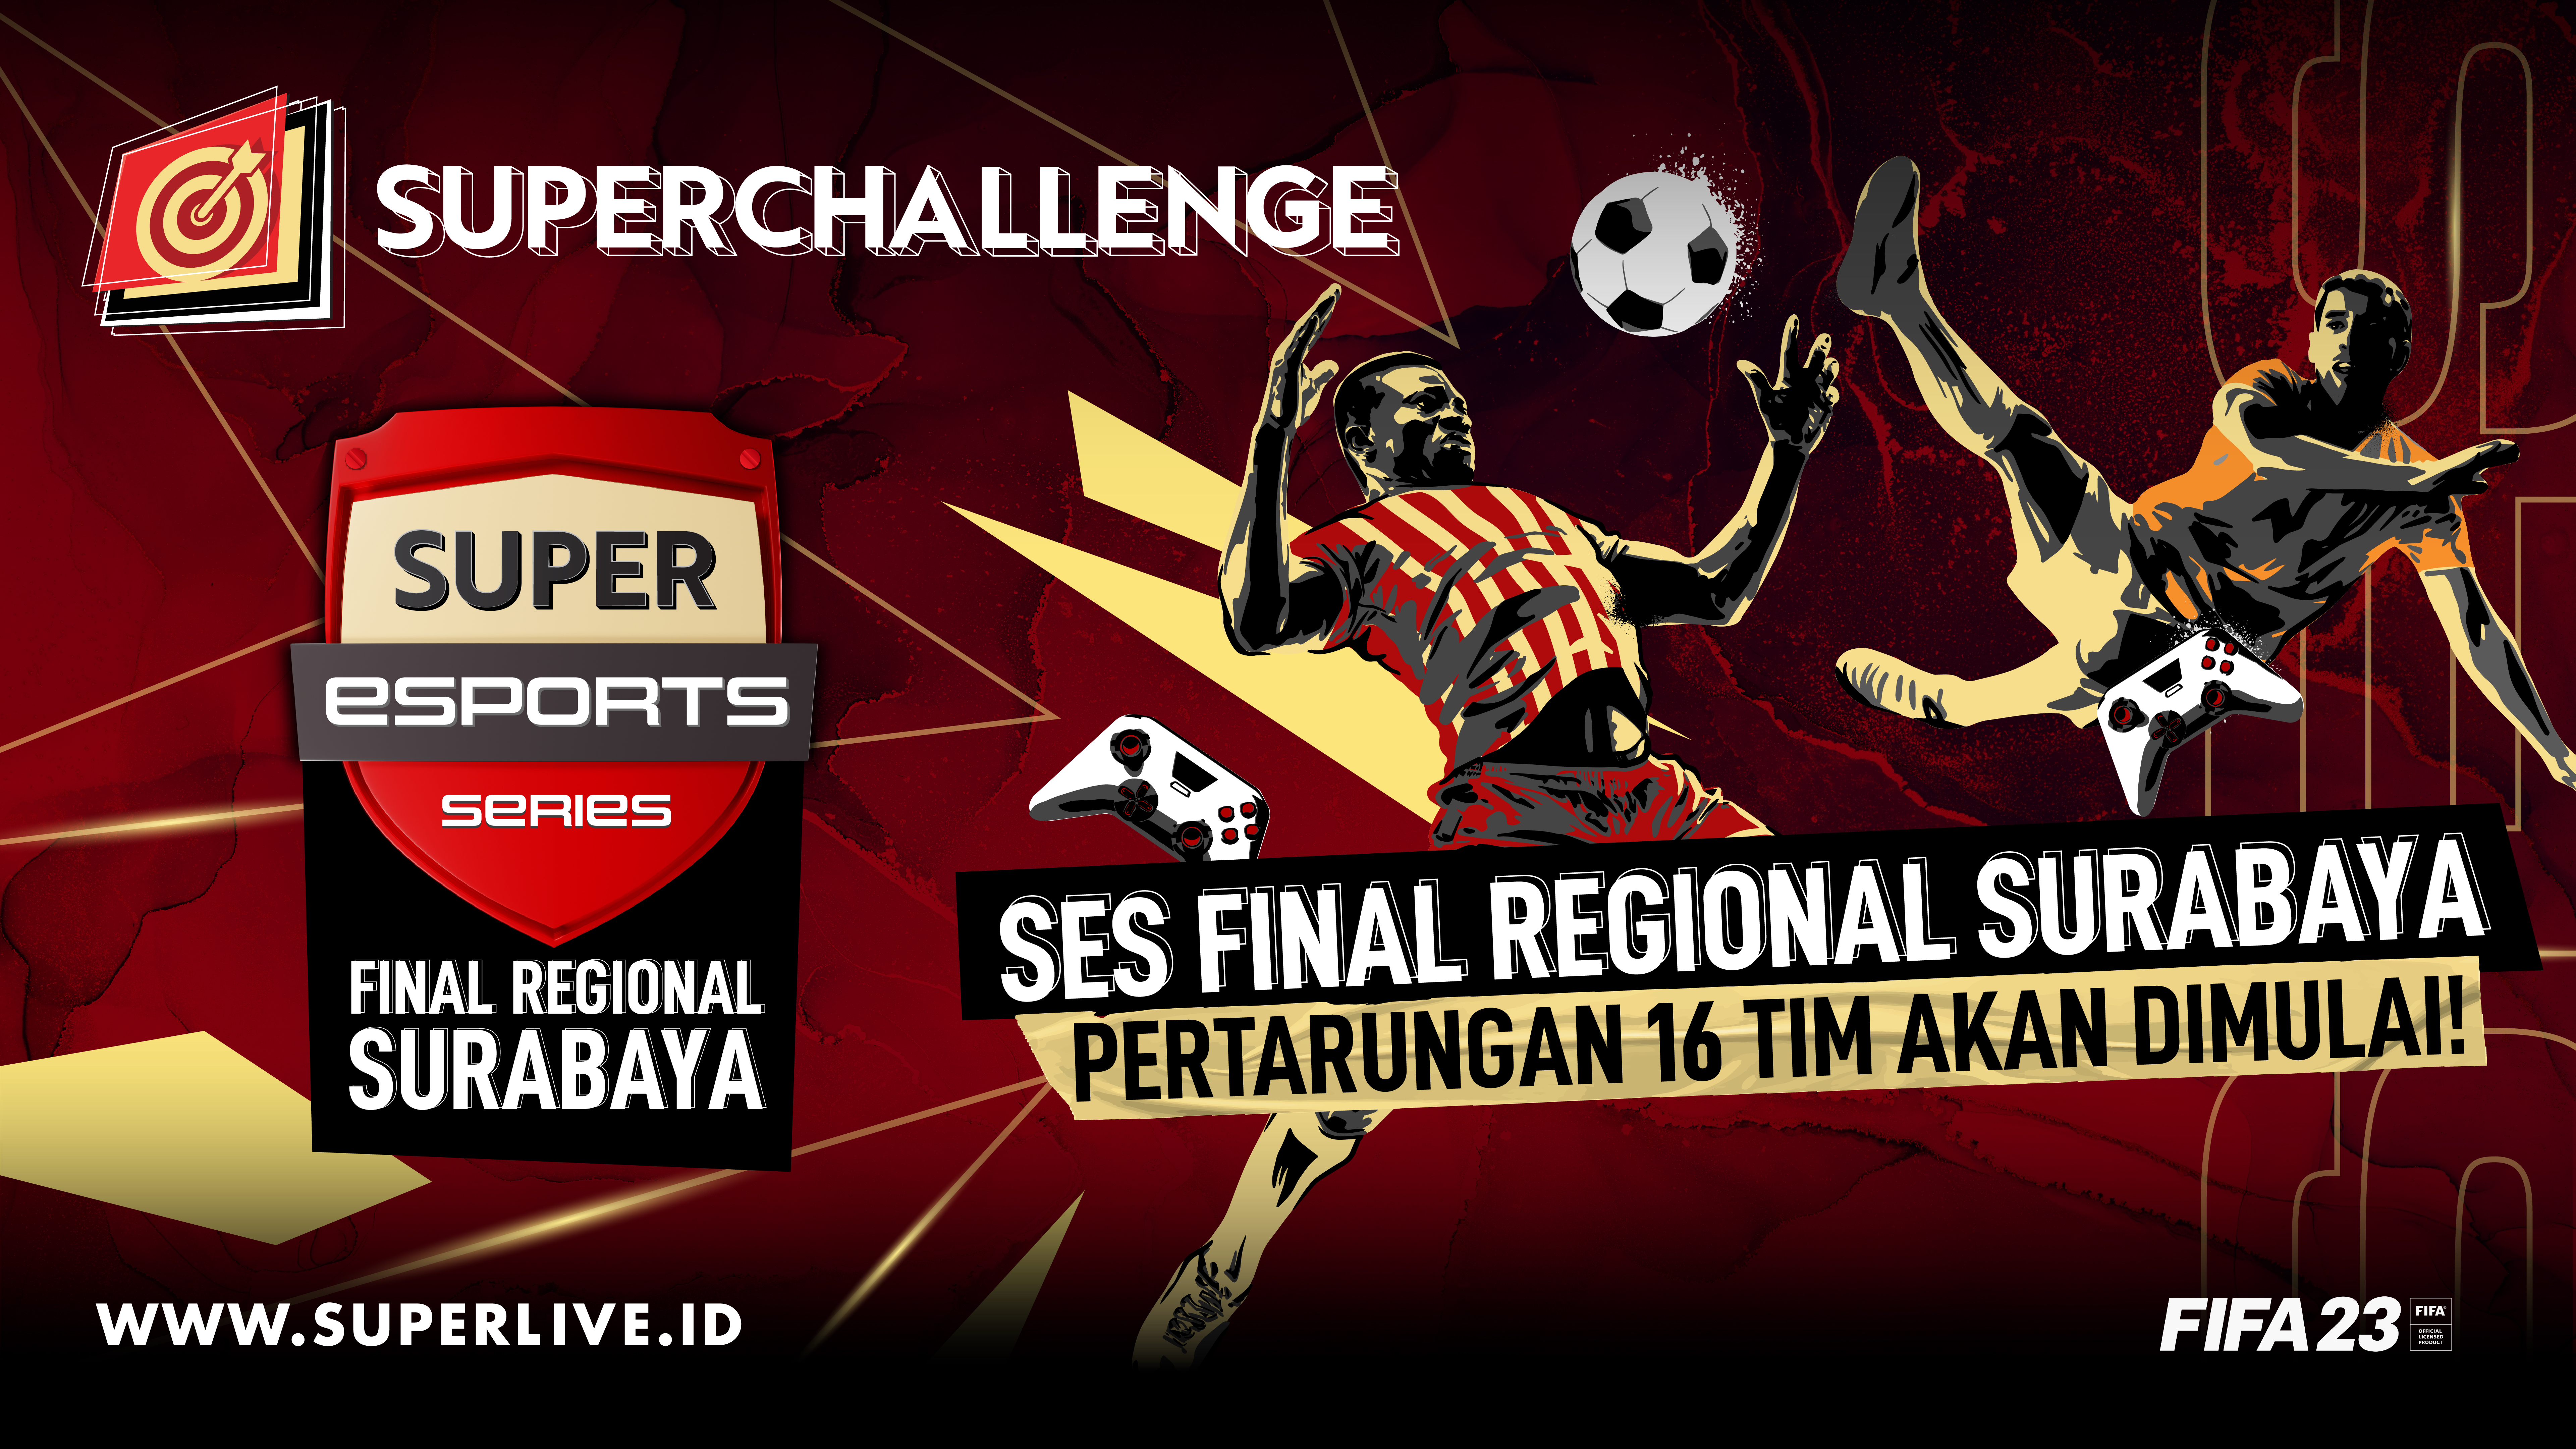 Super Esports Series FIFA 2023 Final Regional Surabaya Siap Digelar, Prize Pool 350jt!